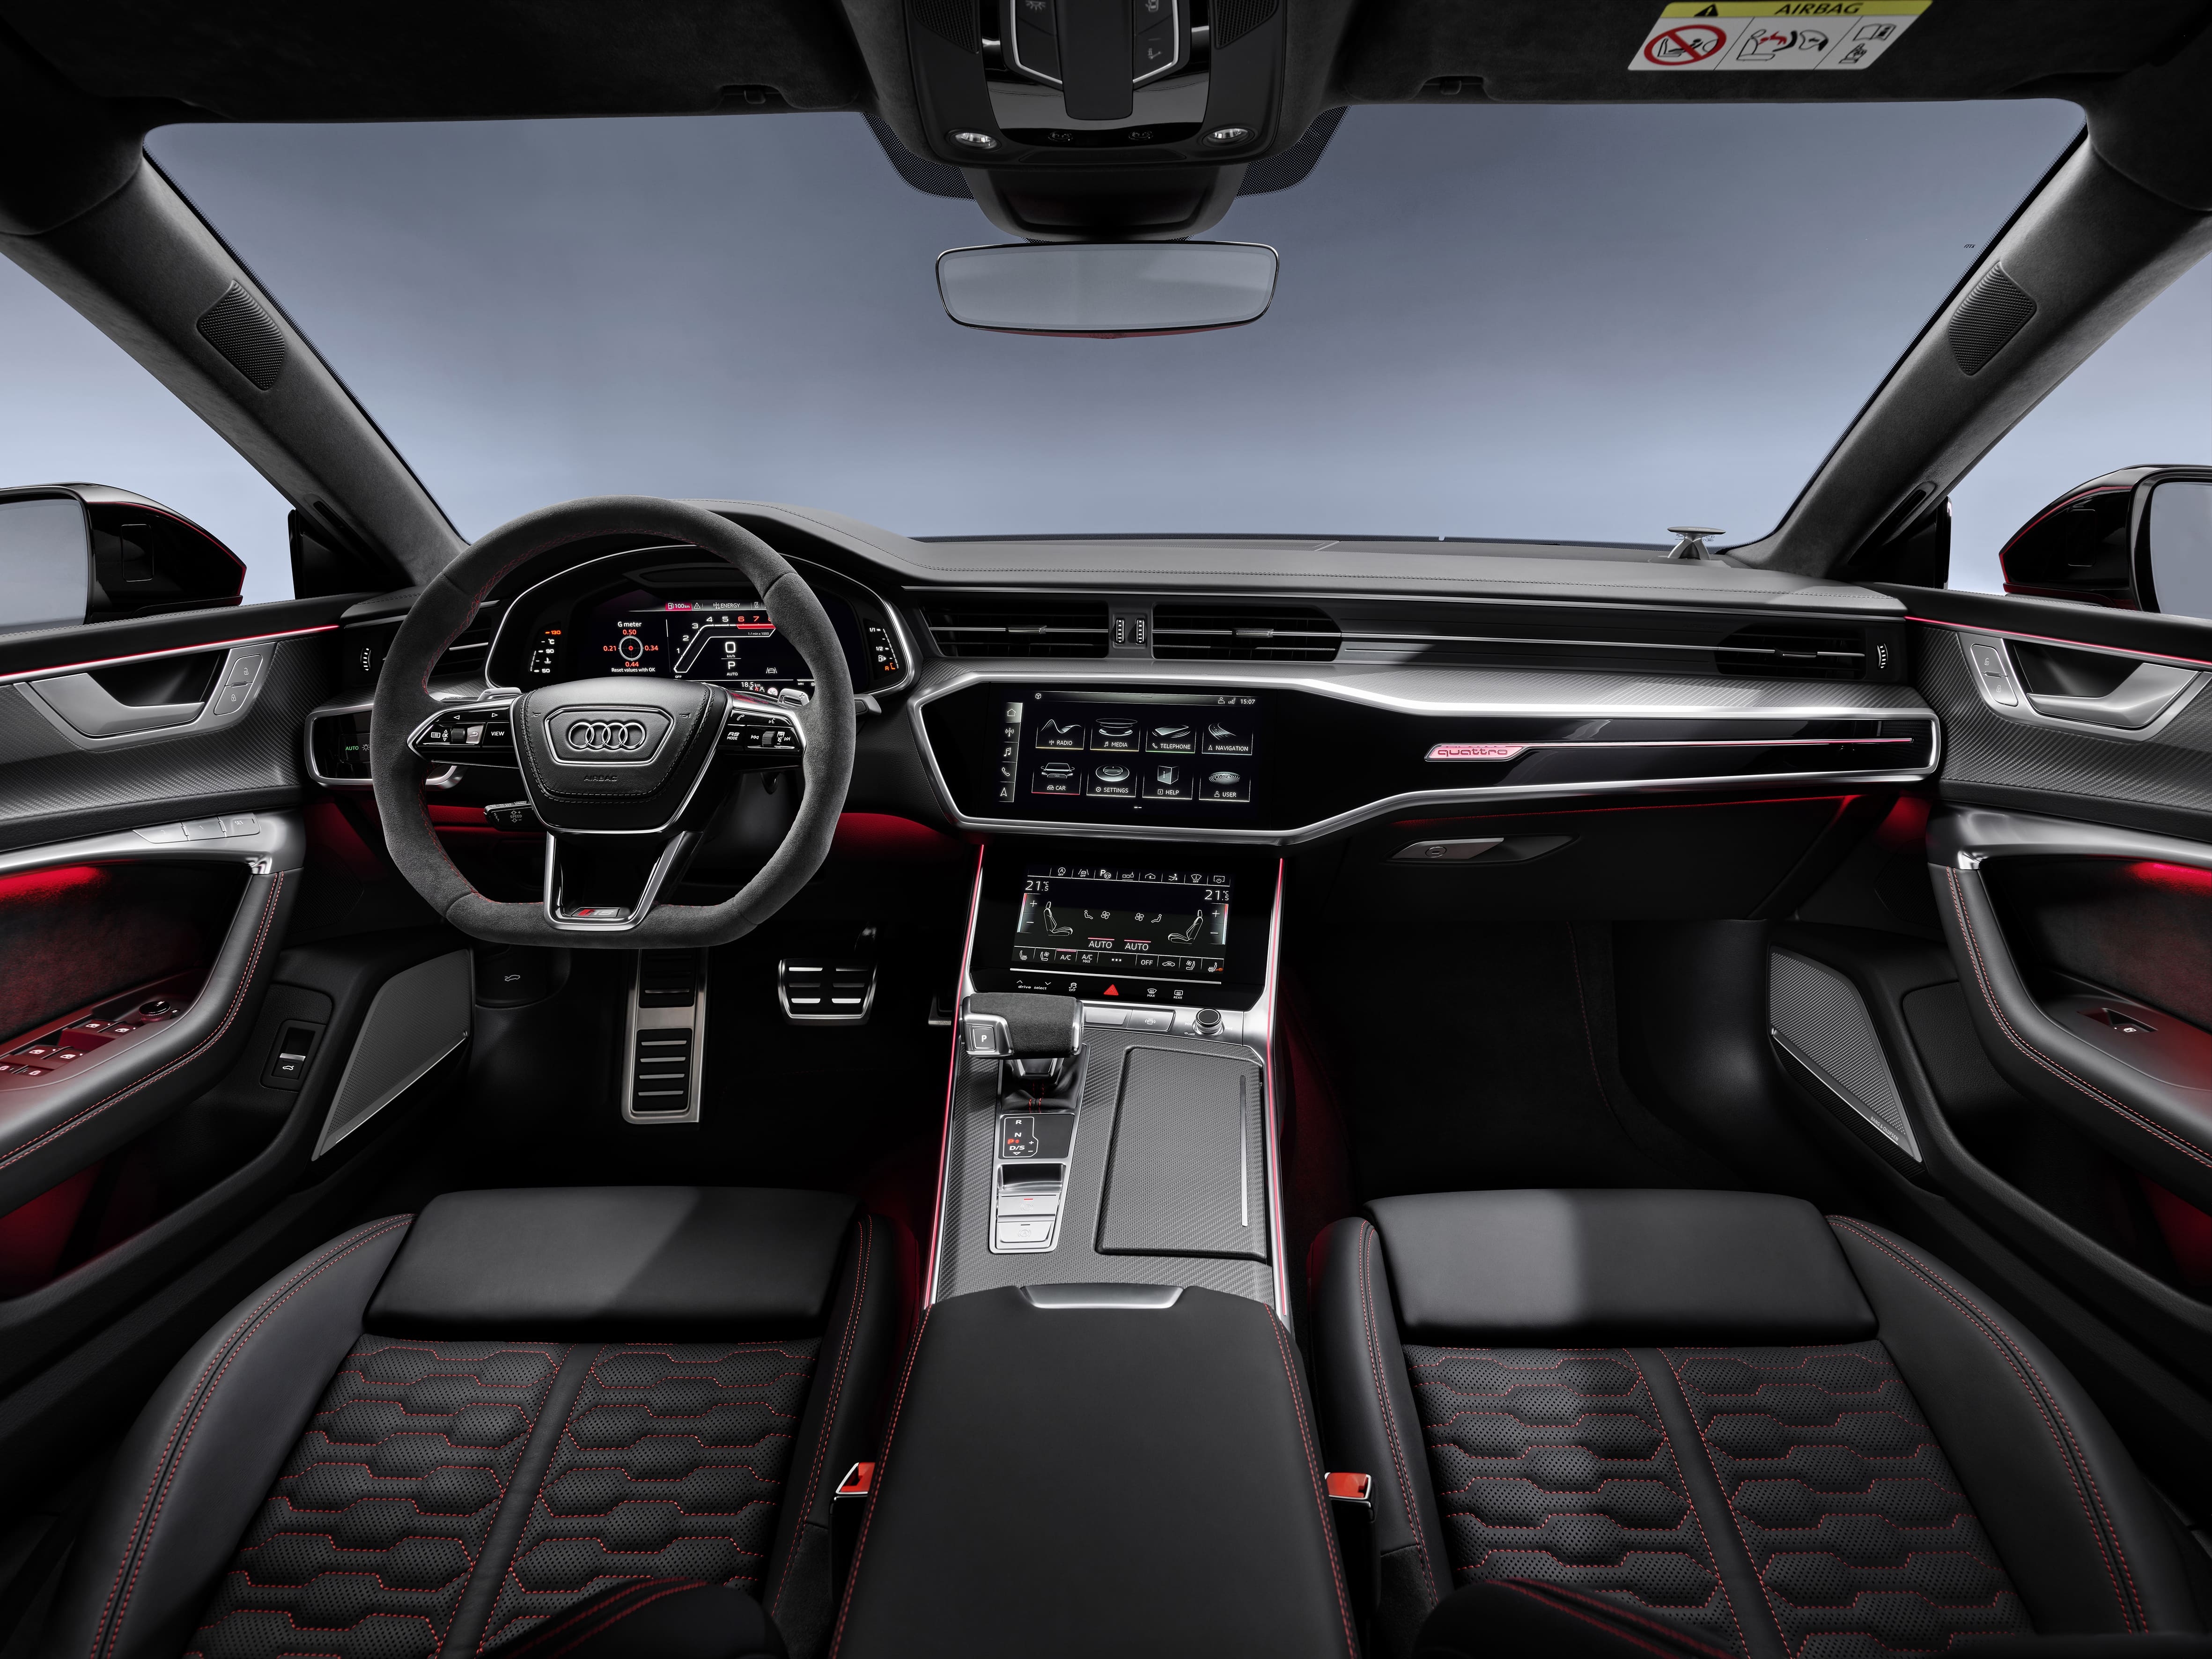 Audi S7 Sportback interior specifications